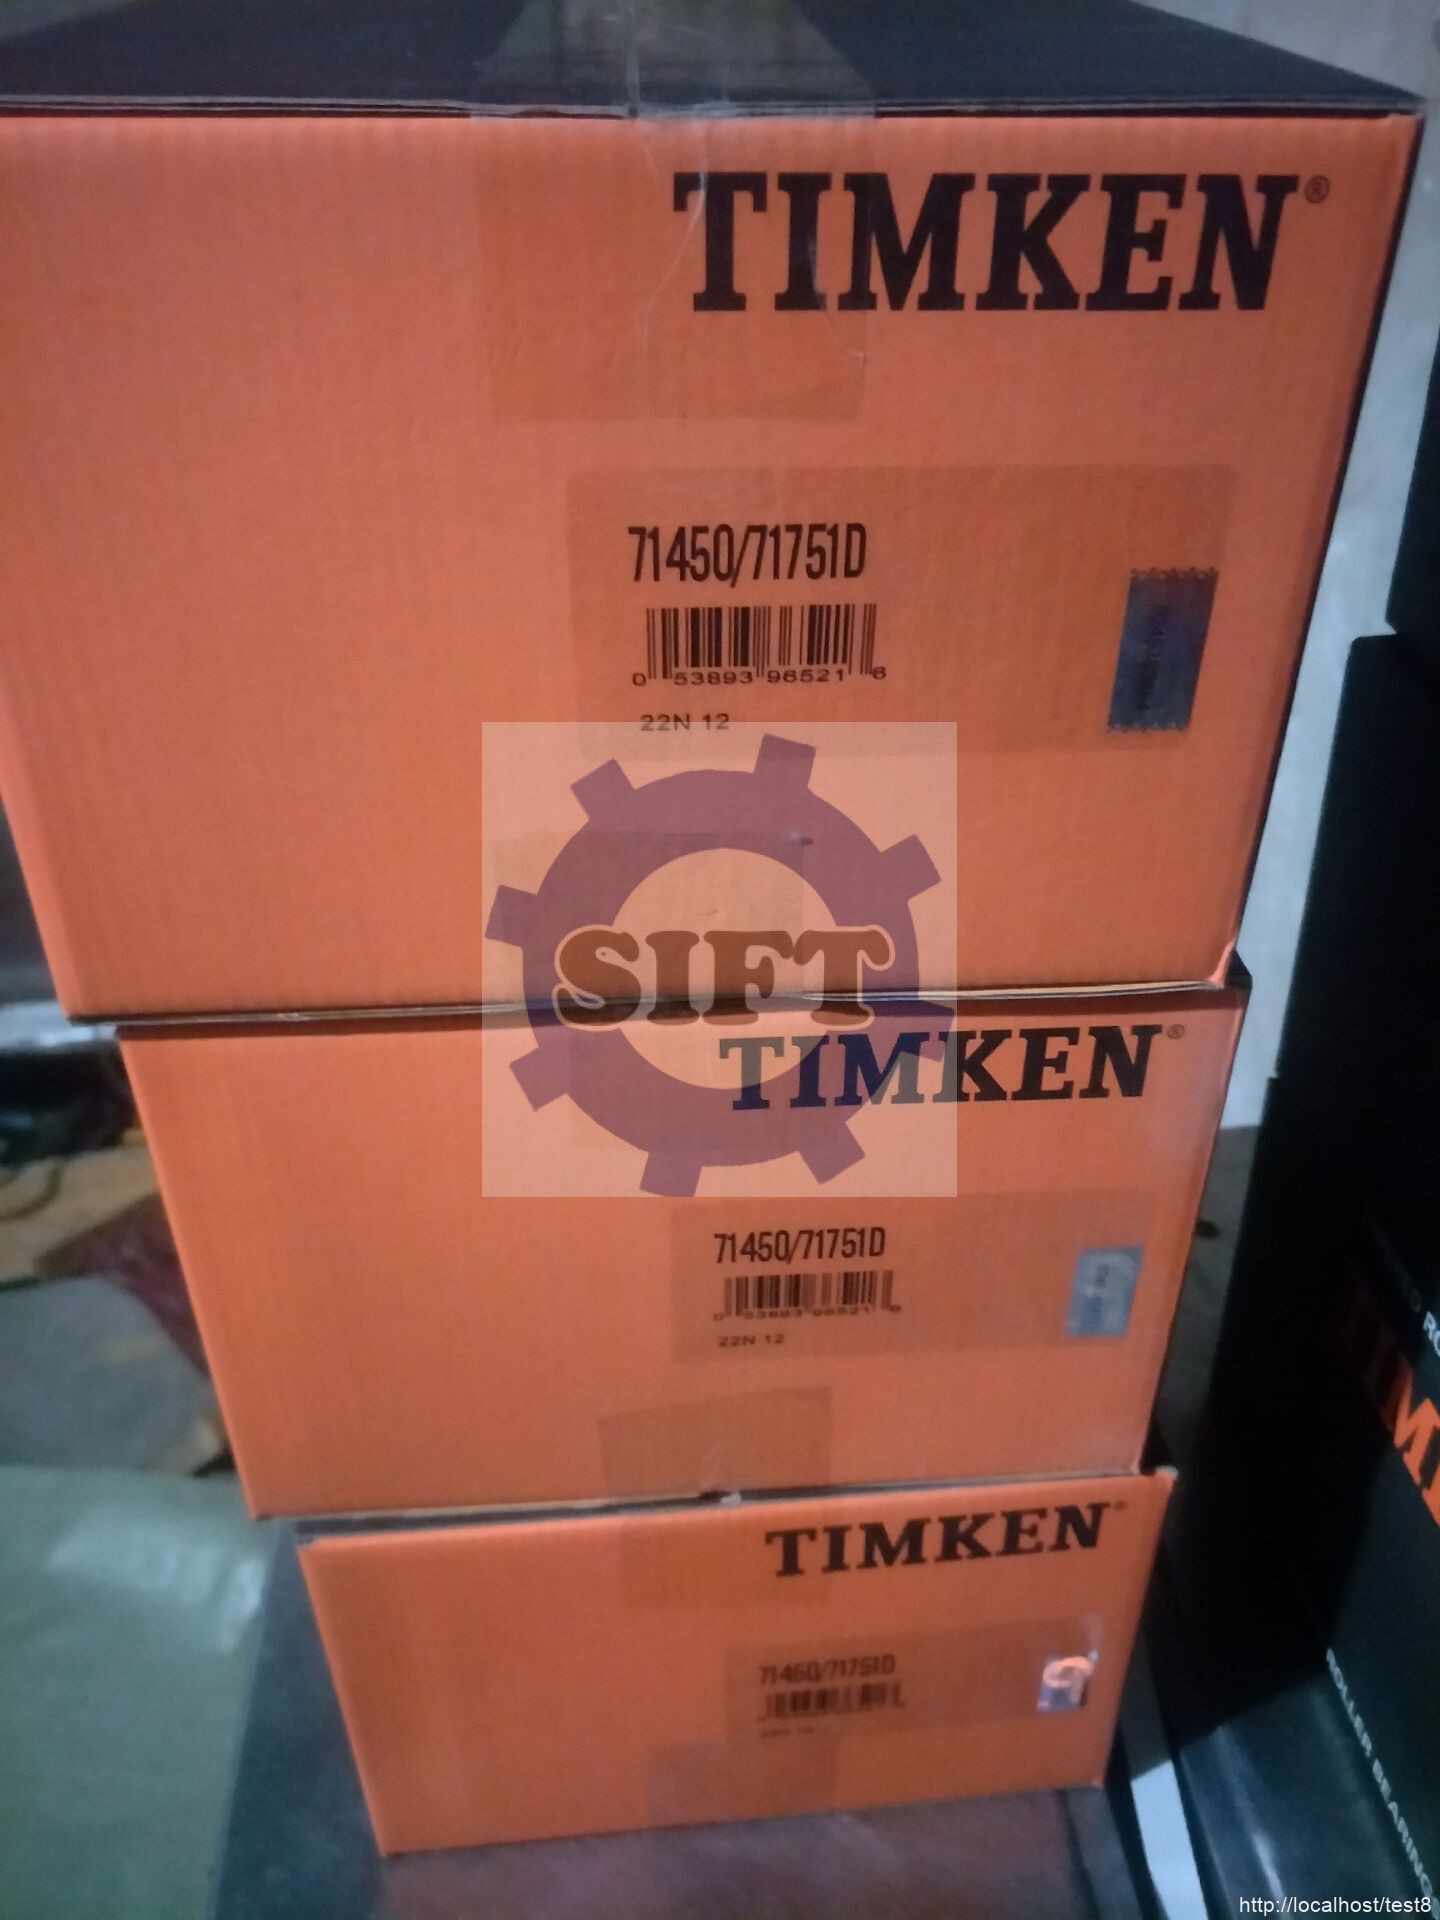 TIMKEN 71450/71751D